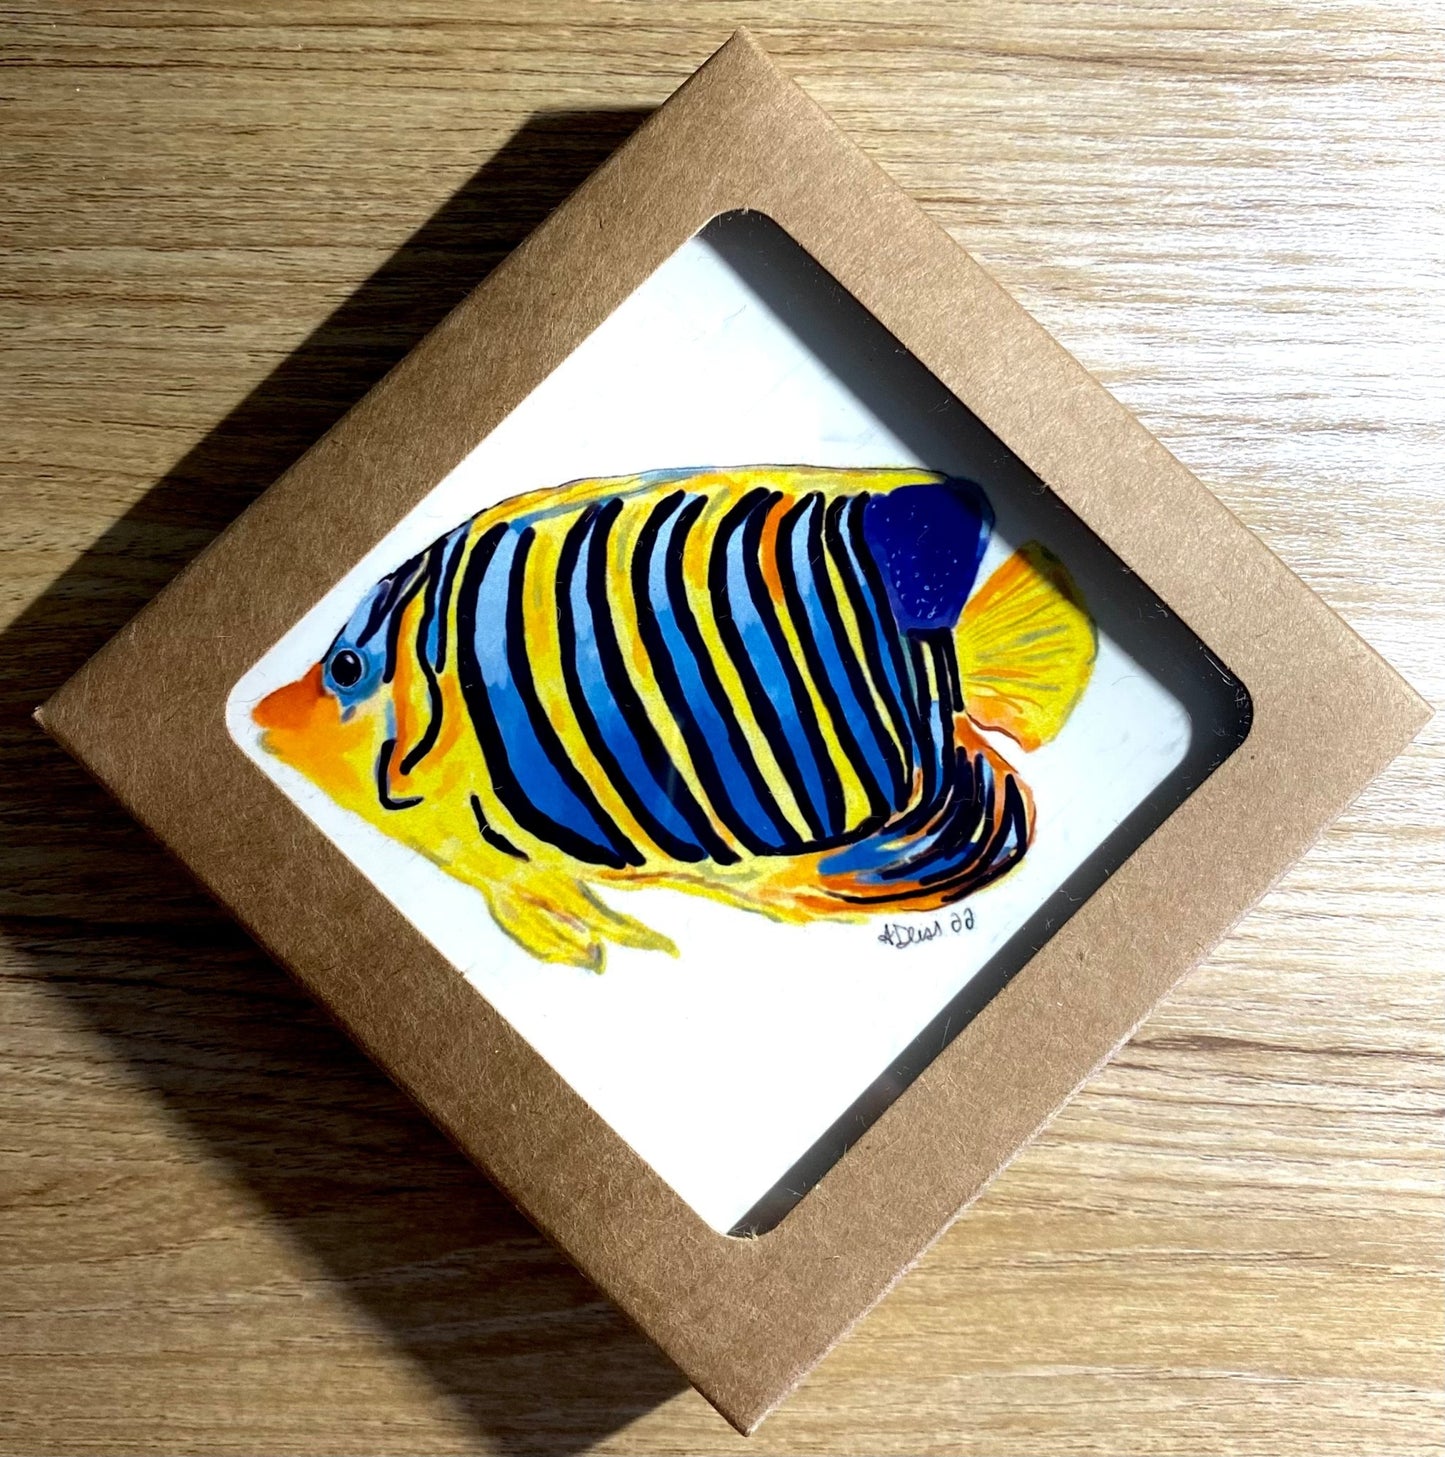 Angel Fish Coaster set - Square 4” - Blue Cava